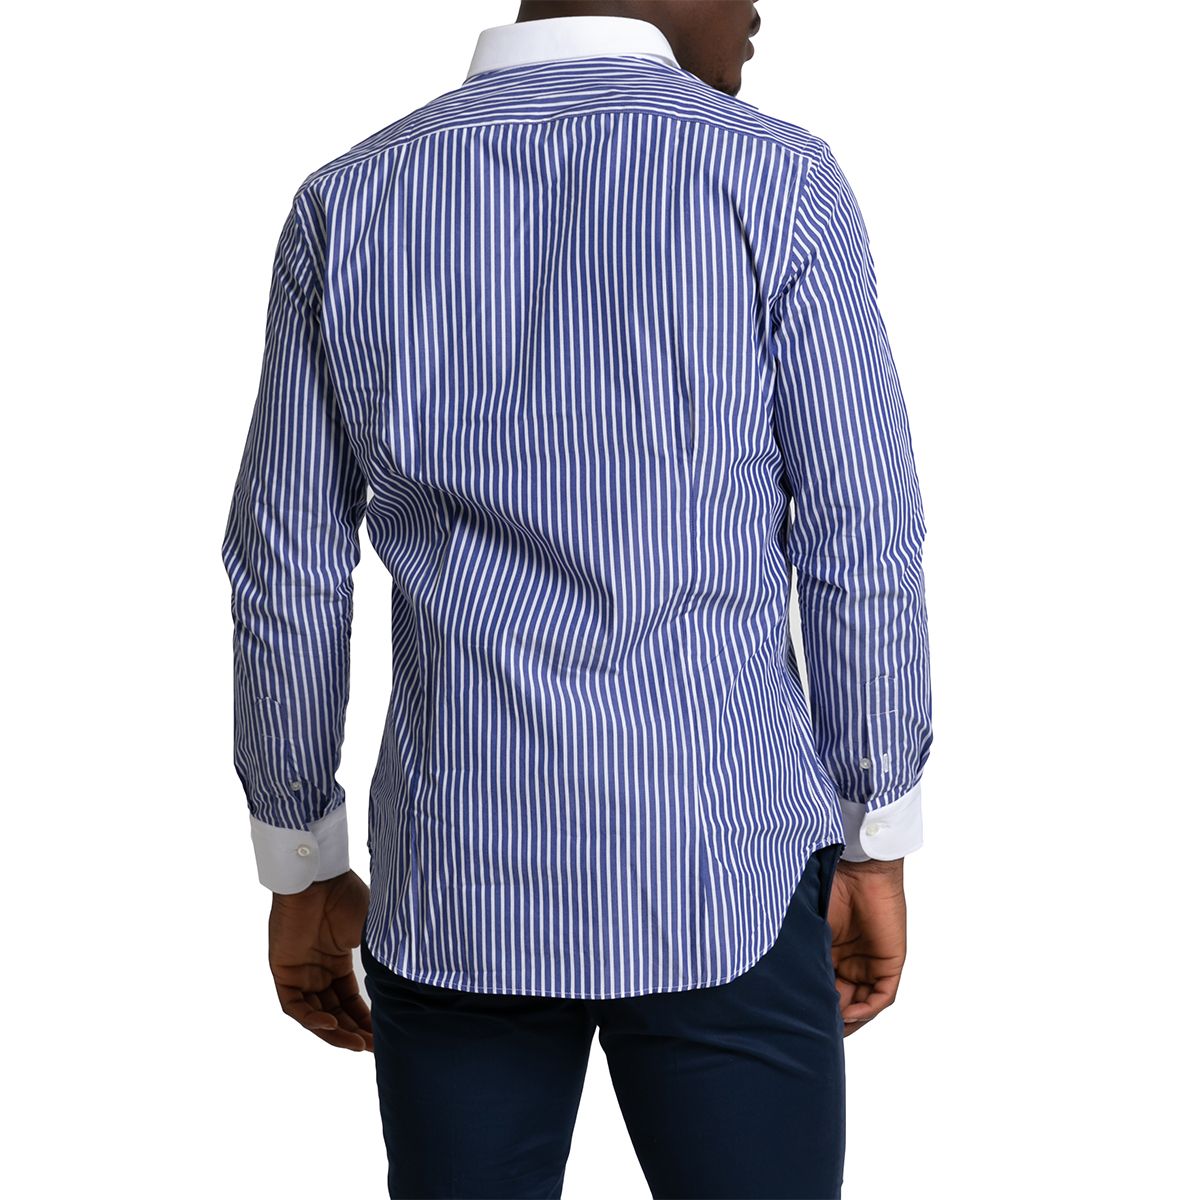 White/Blue Striped Classic Shirt